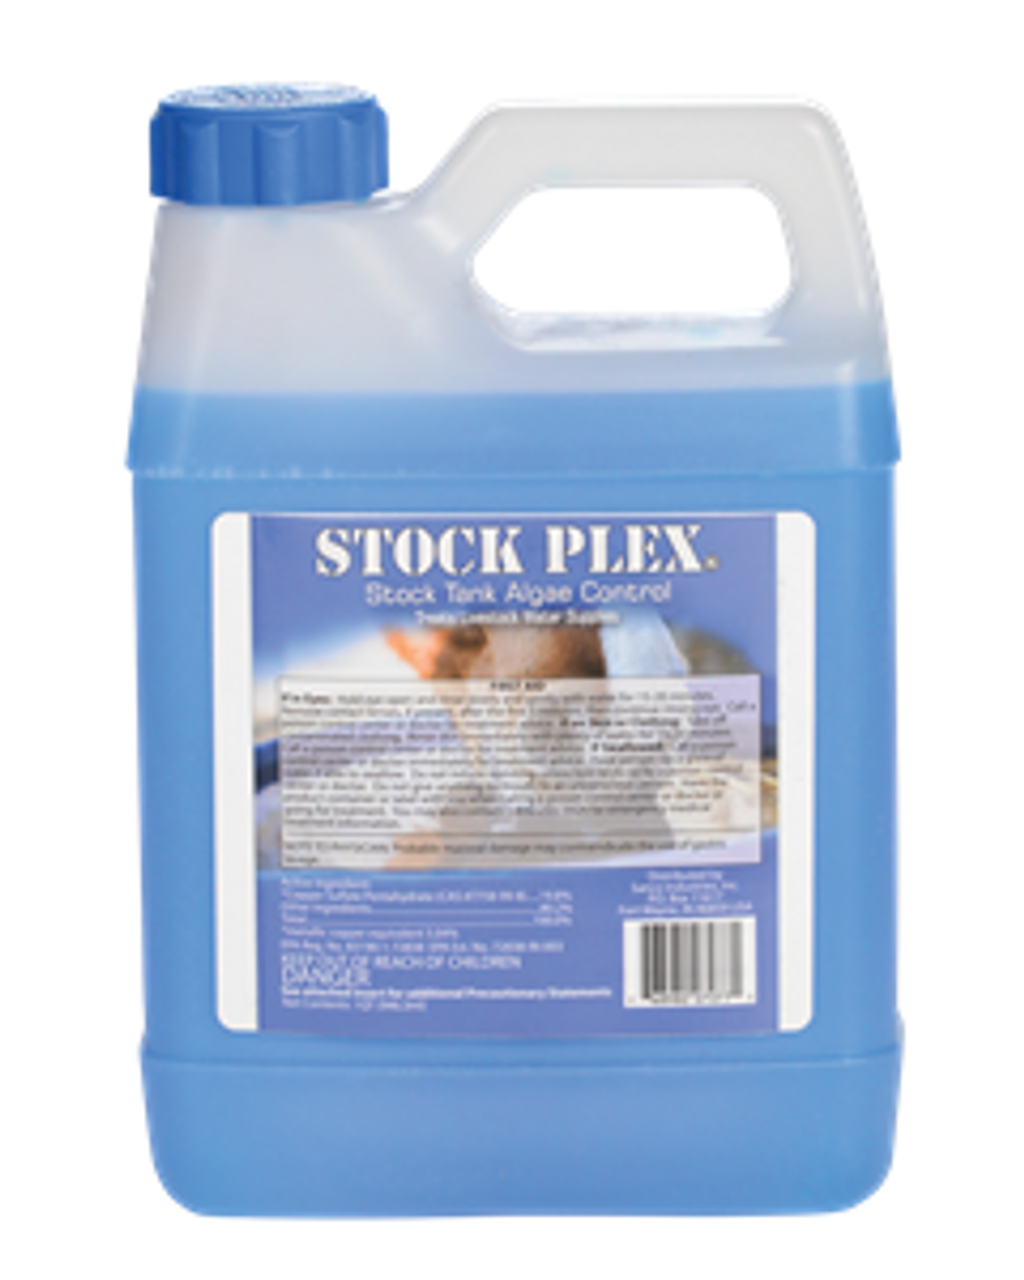 Stock Plex Stock Tank Algae Control  **In Store Pick Up Only**